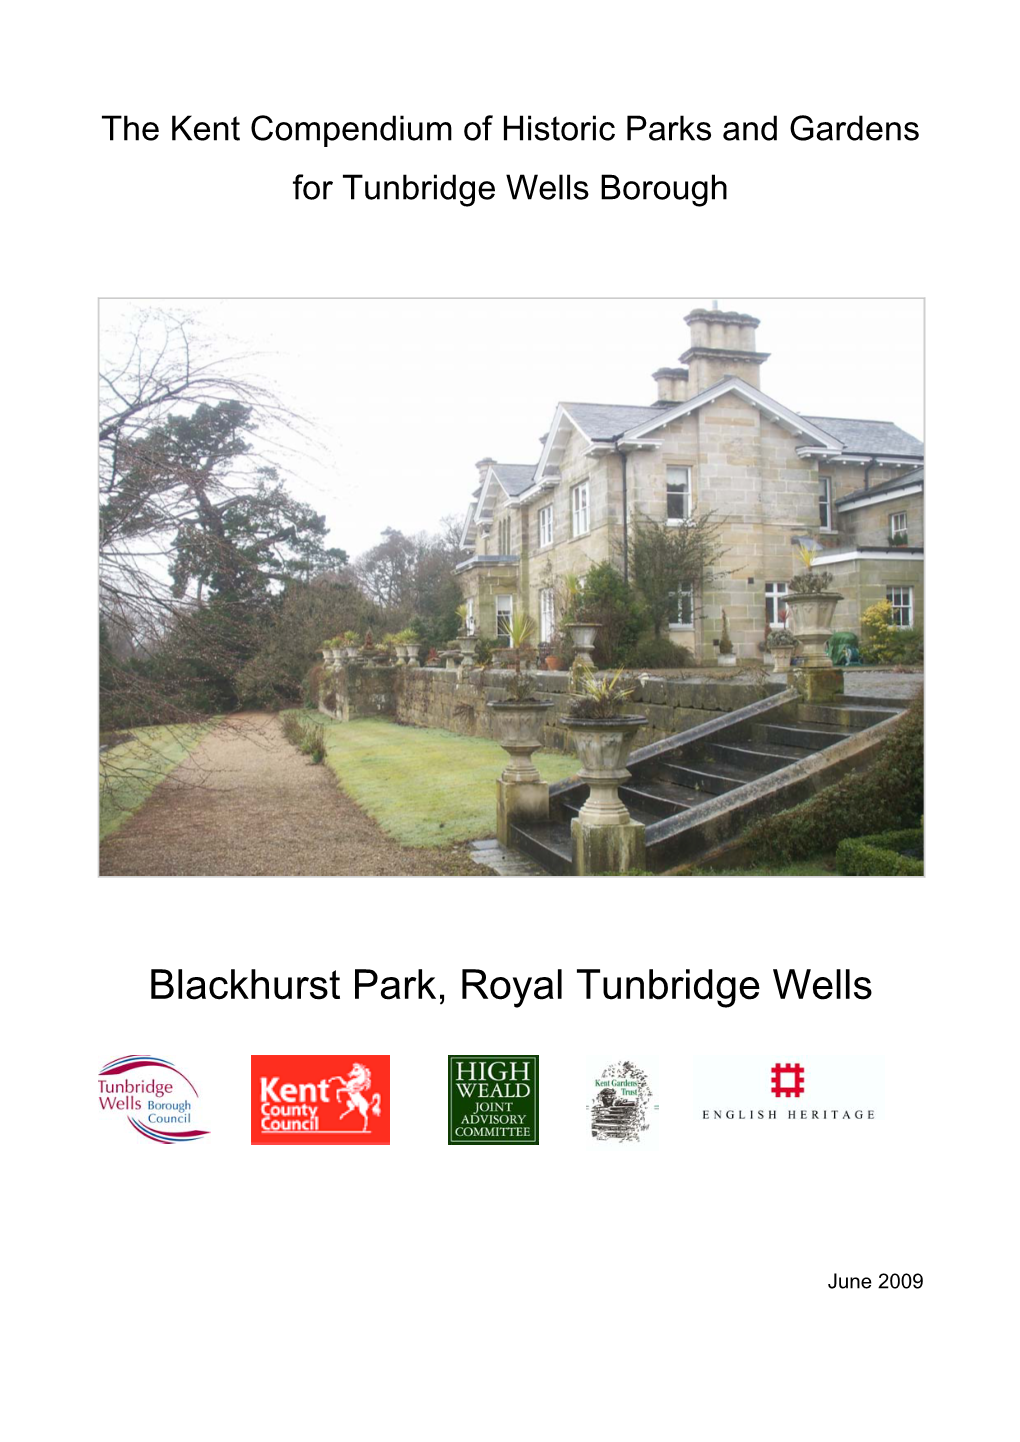 Blackhurst Park, Royal Tunbridge Wells